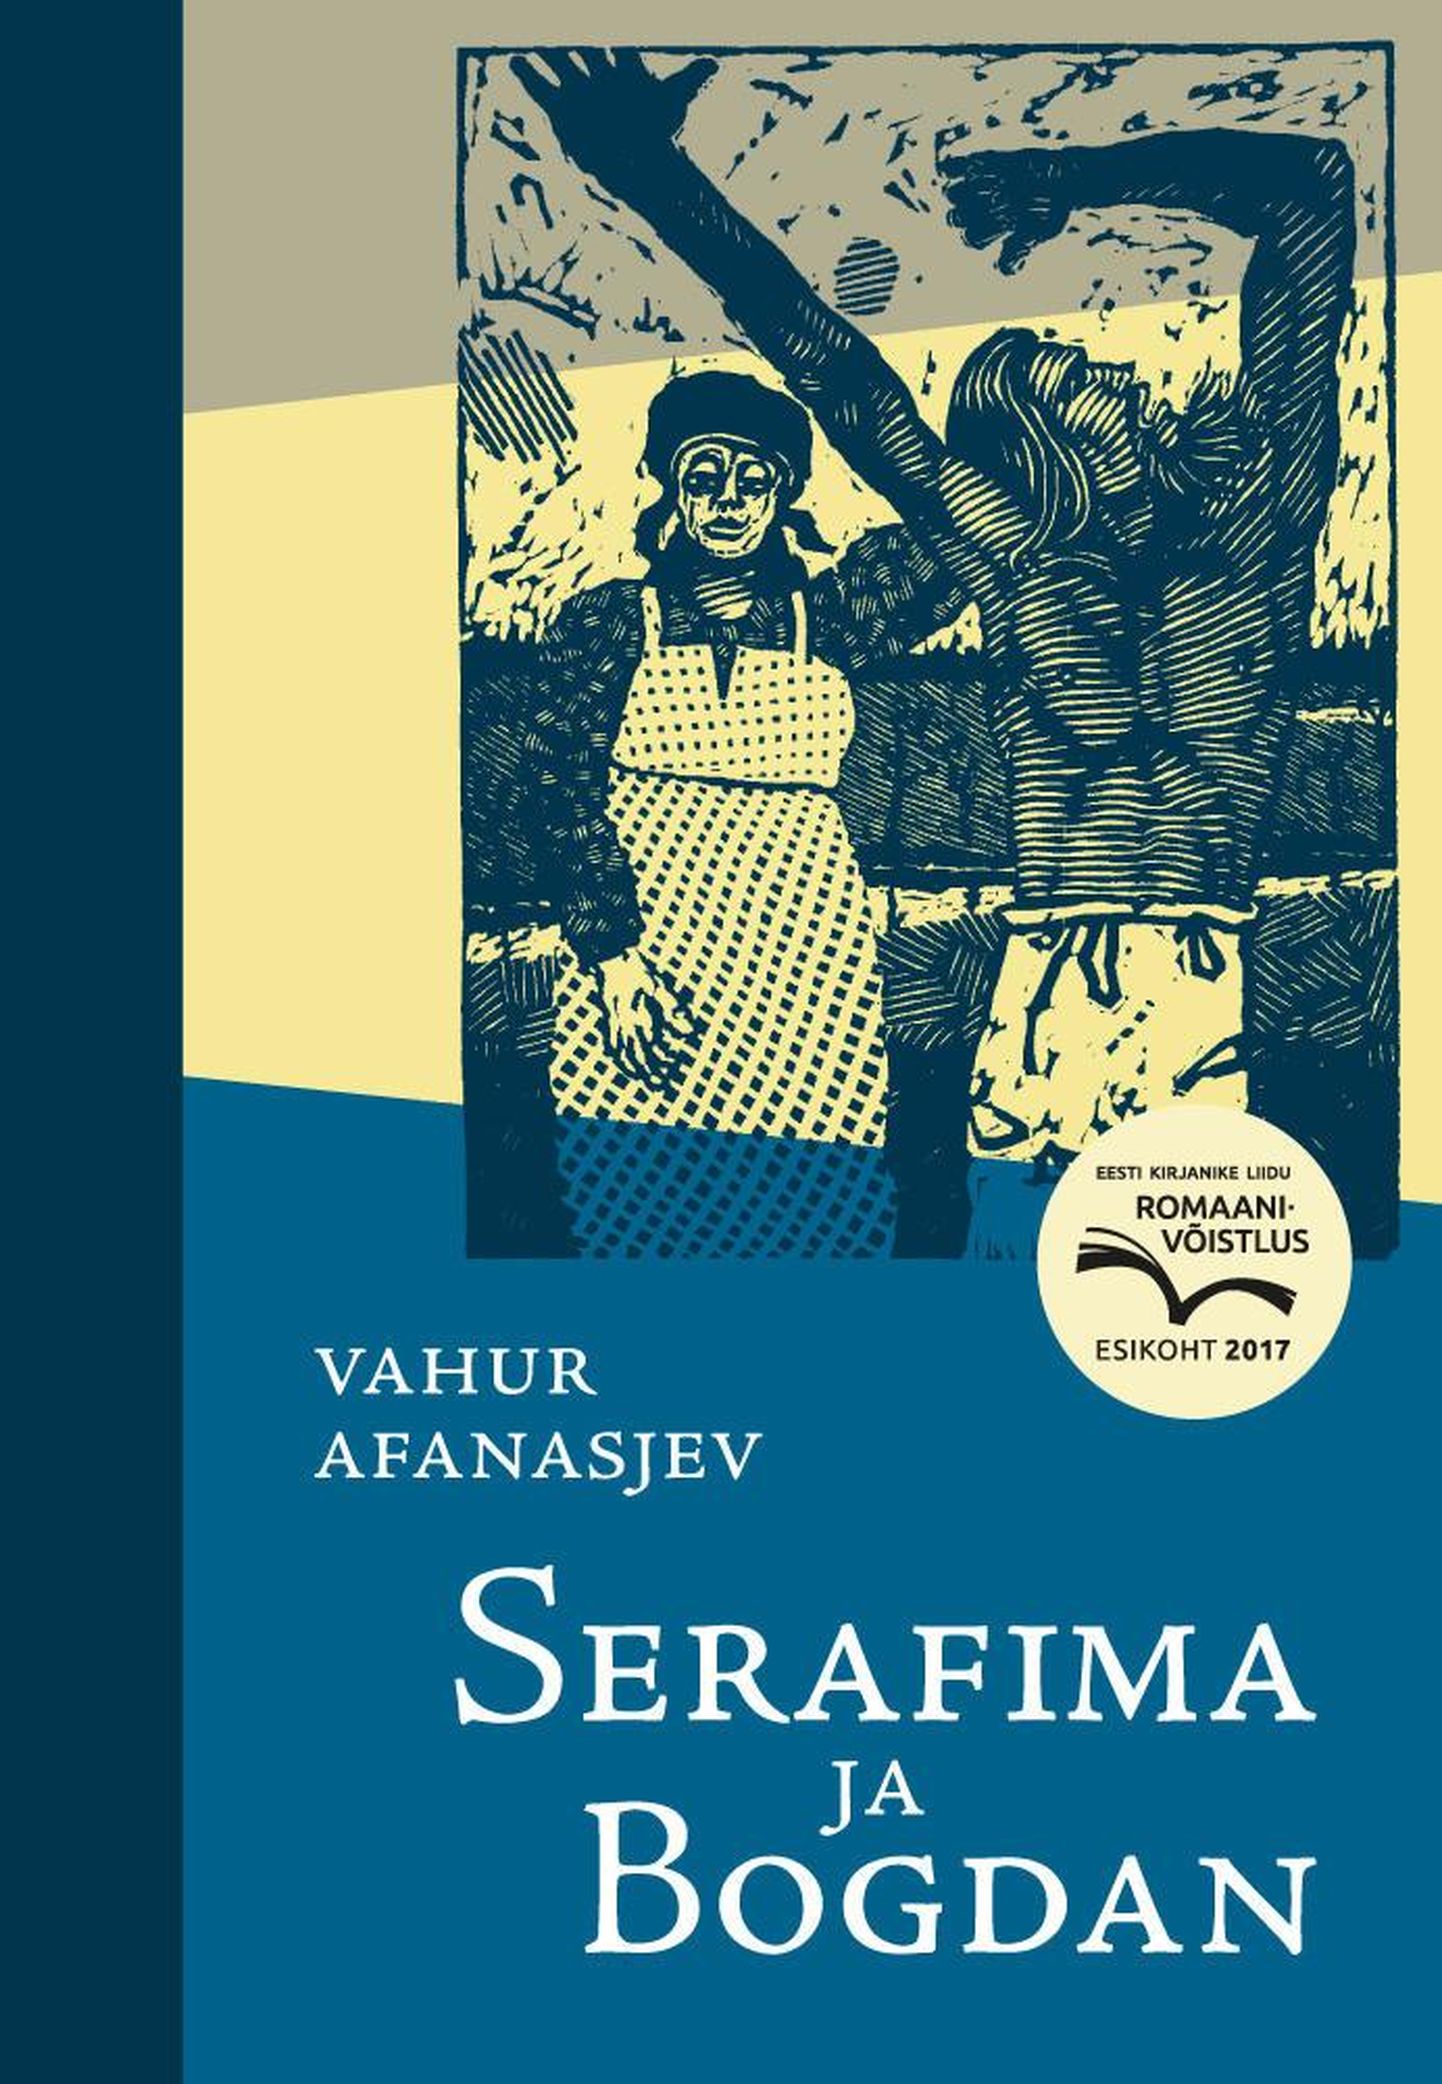 Vahur Afanasjev, «Serafima ja Bogdan» FOTO: Raamat